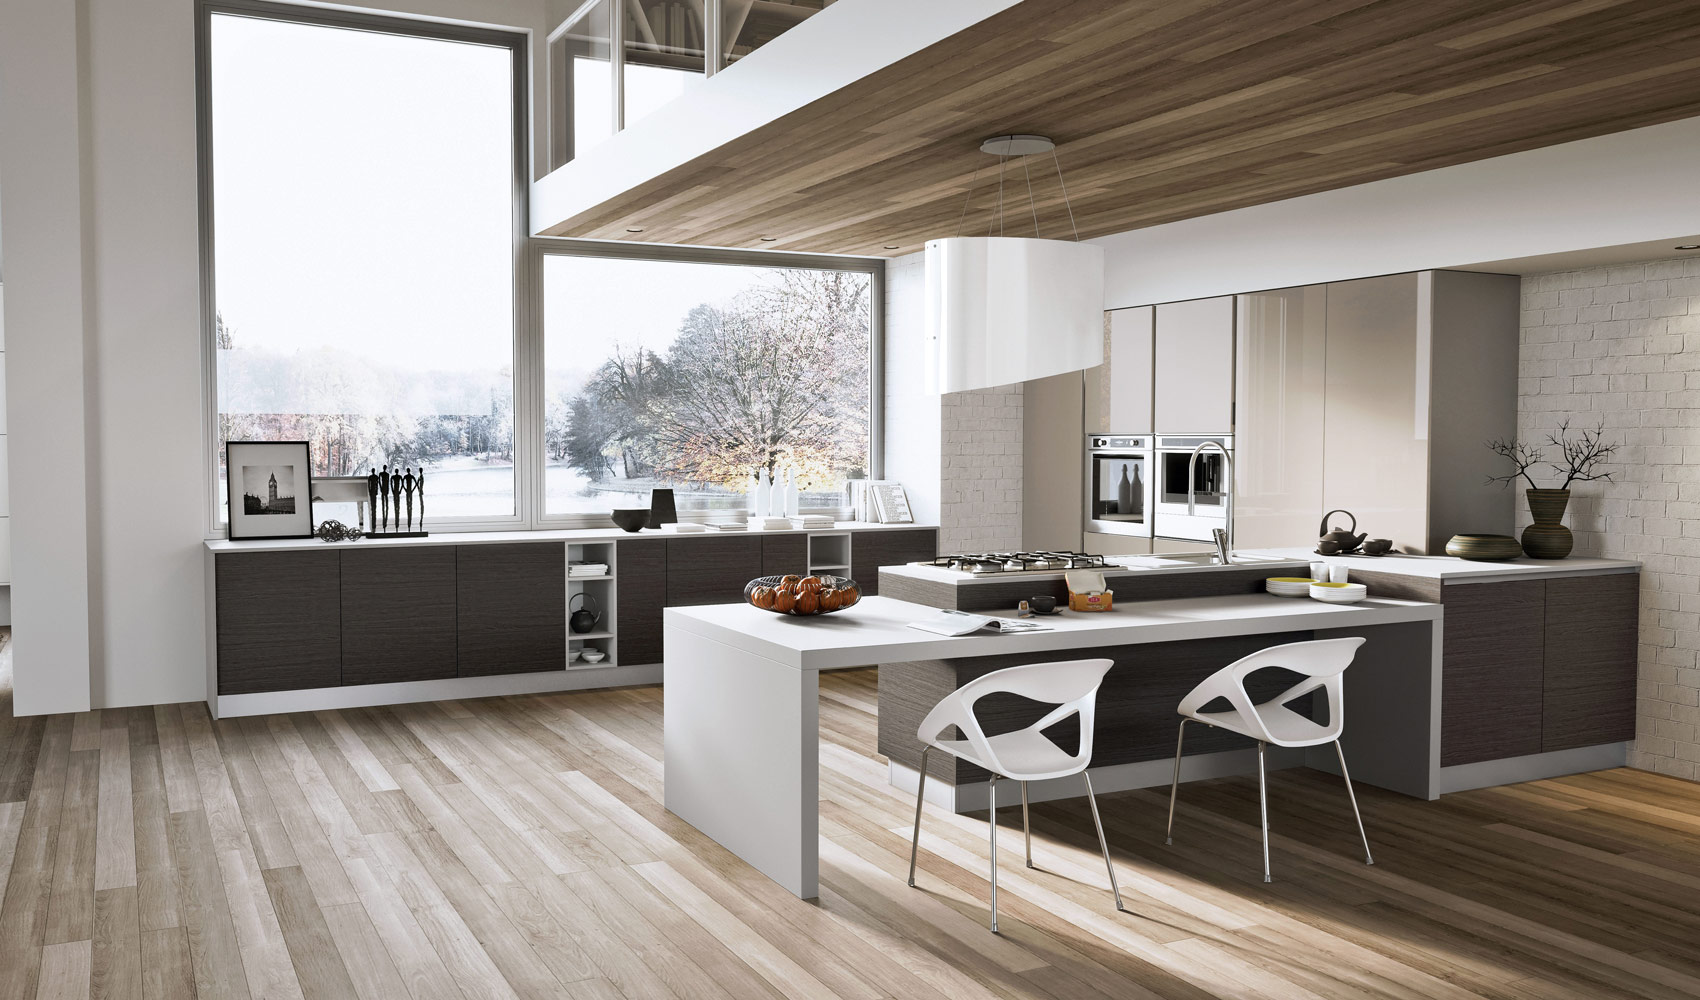 Trendy Kitchen Designs With Modern and Minimalist Style Decor Ideas ...